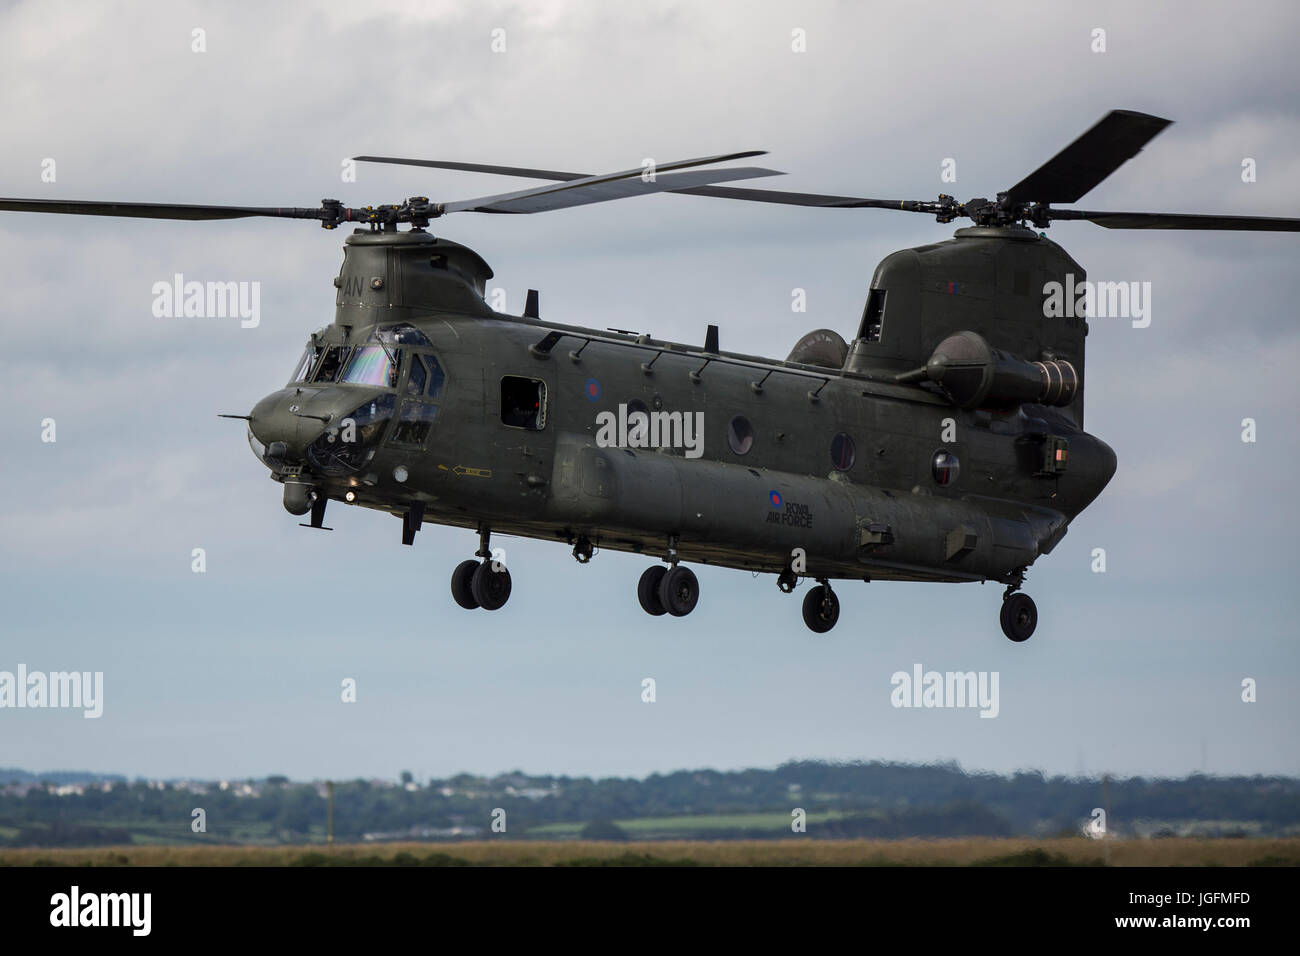 A Boeing Chinook helicopter of the Royal Air Force at Caernarfon Airport, Caernarfon, Wales, UK. July 3rd 2017. Stock Photo